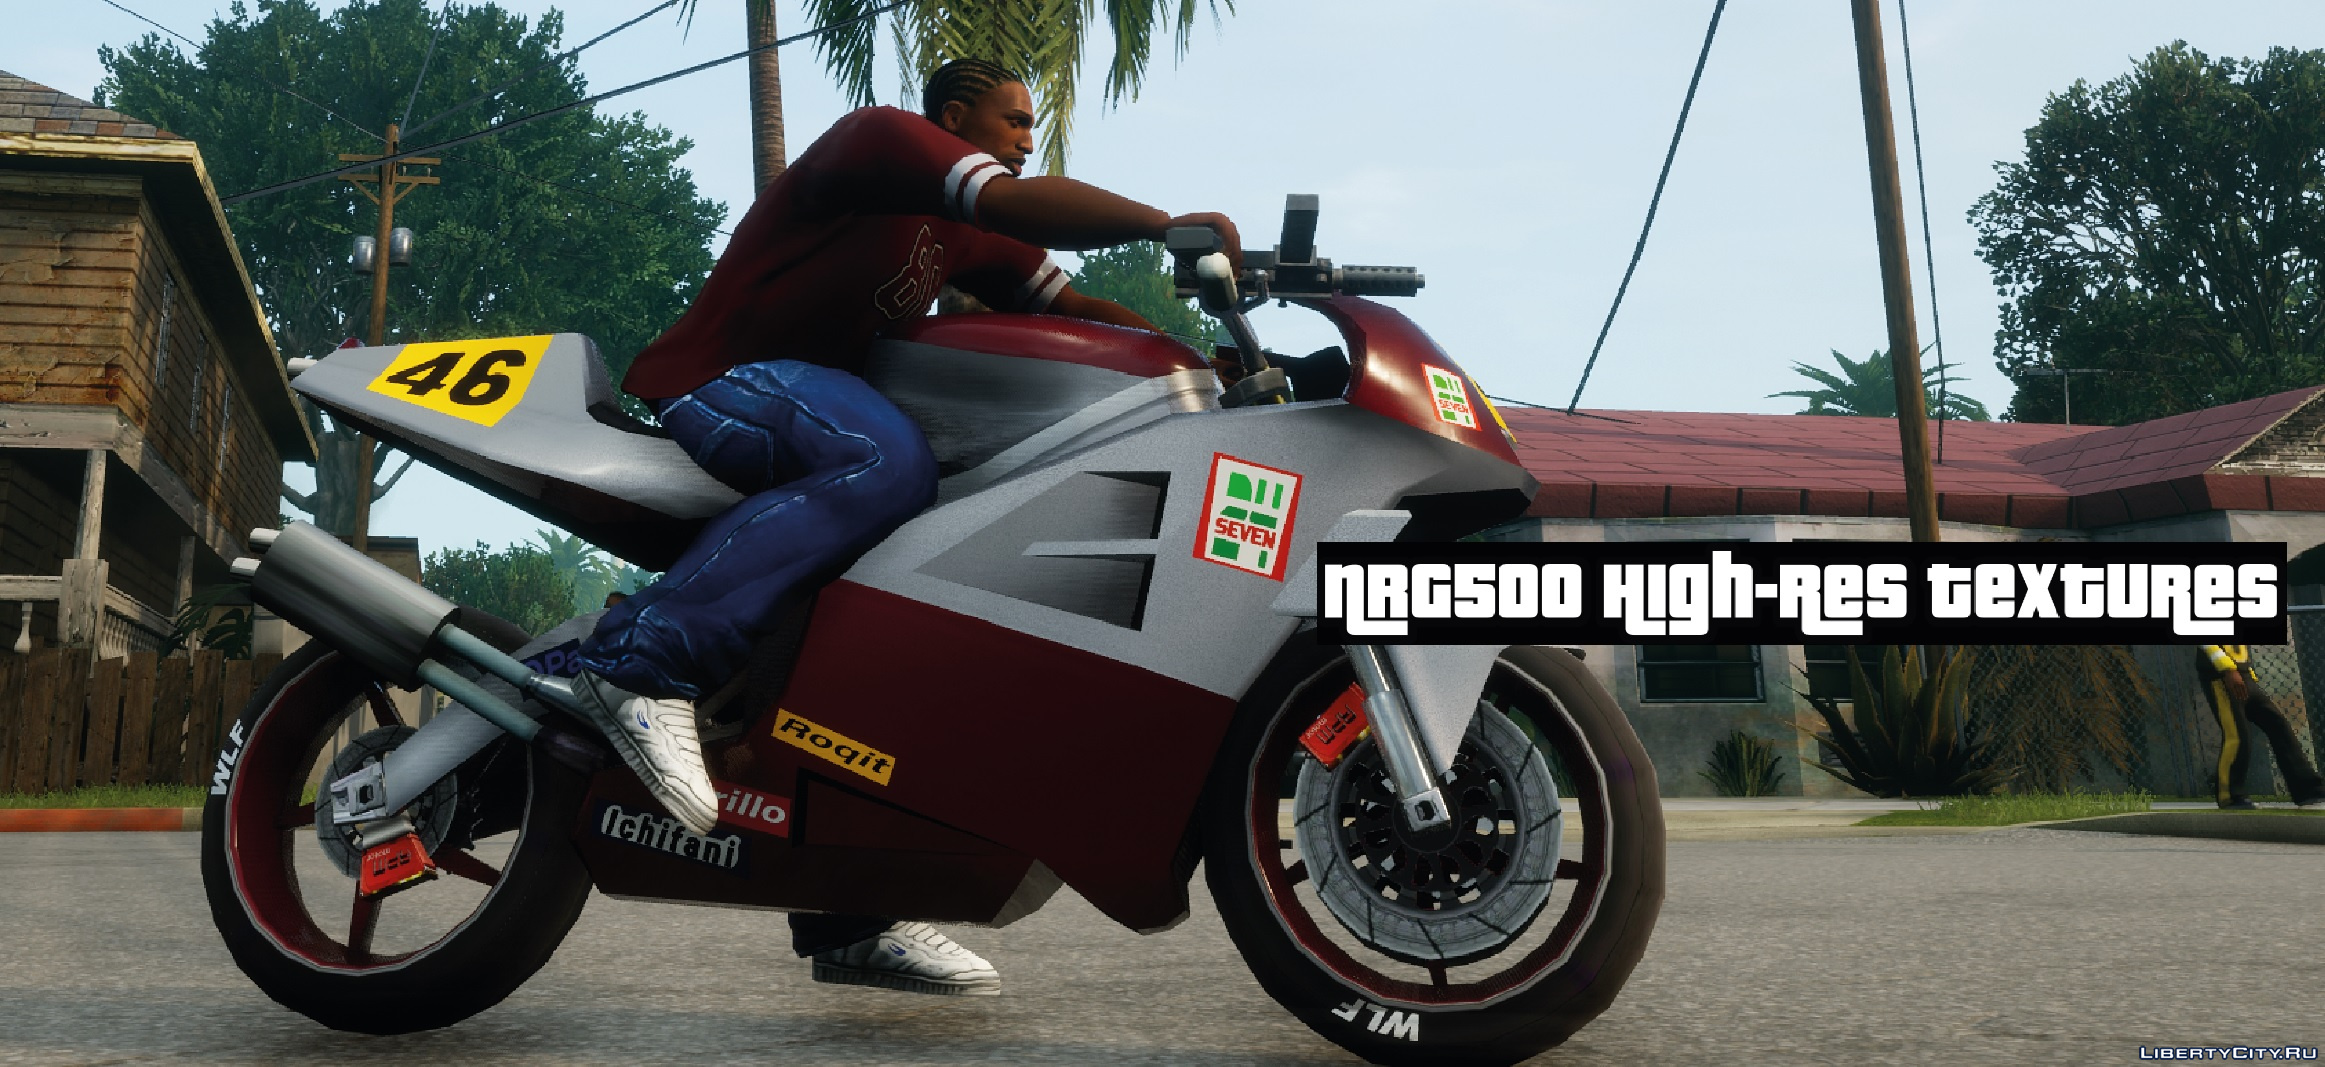 How To Get NRG 500 Heavy Bike In GTA San Andreas